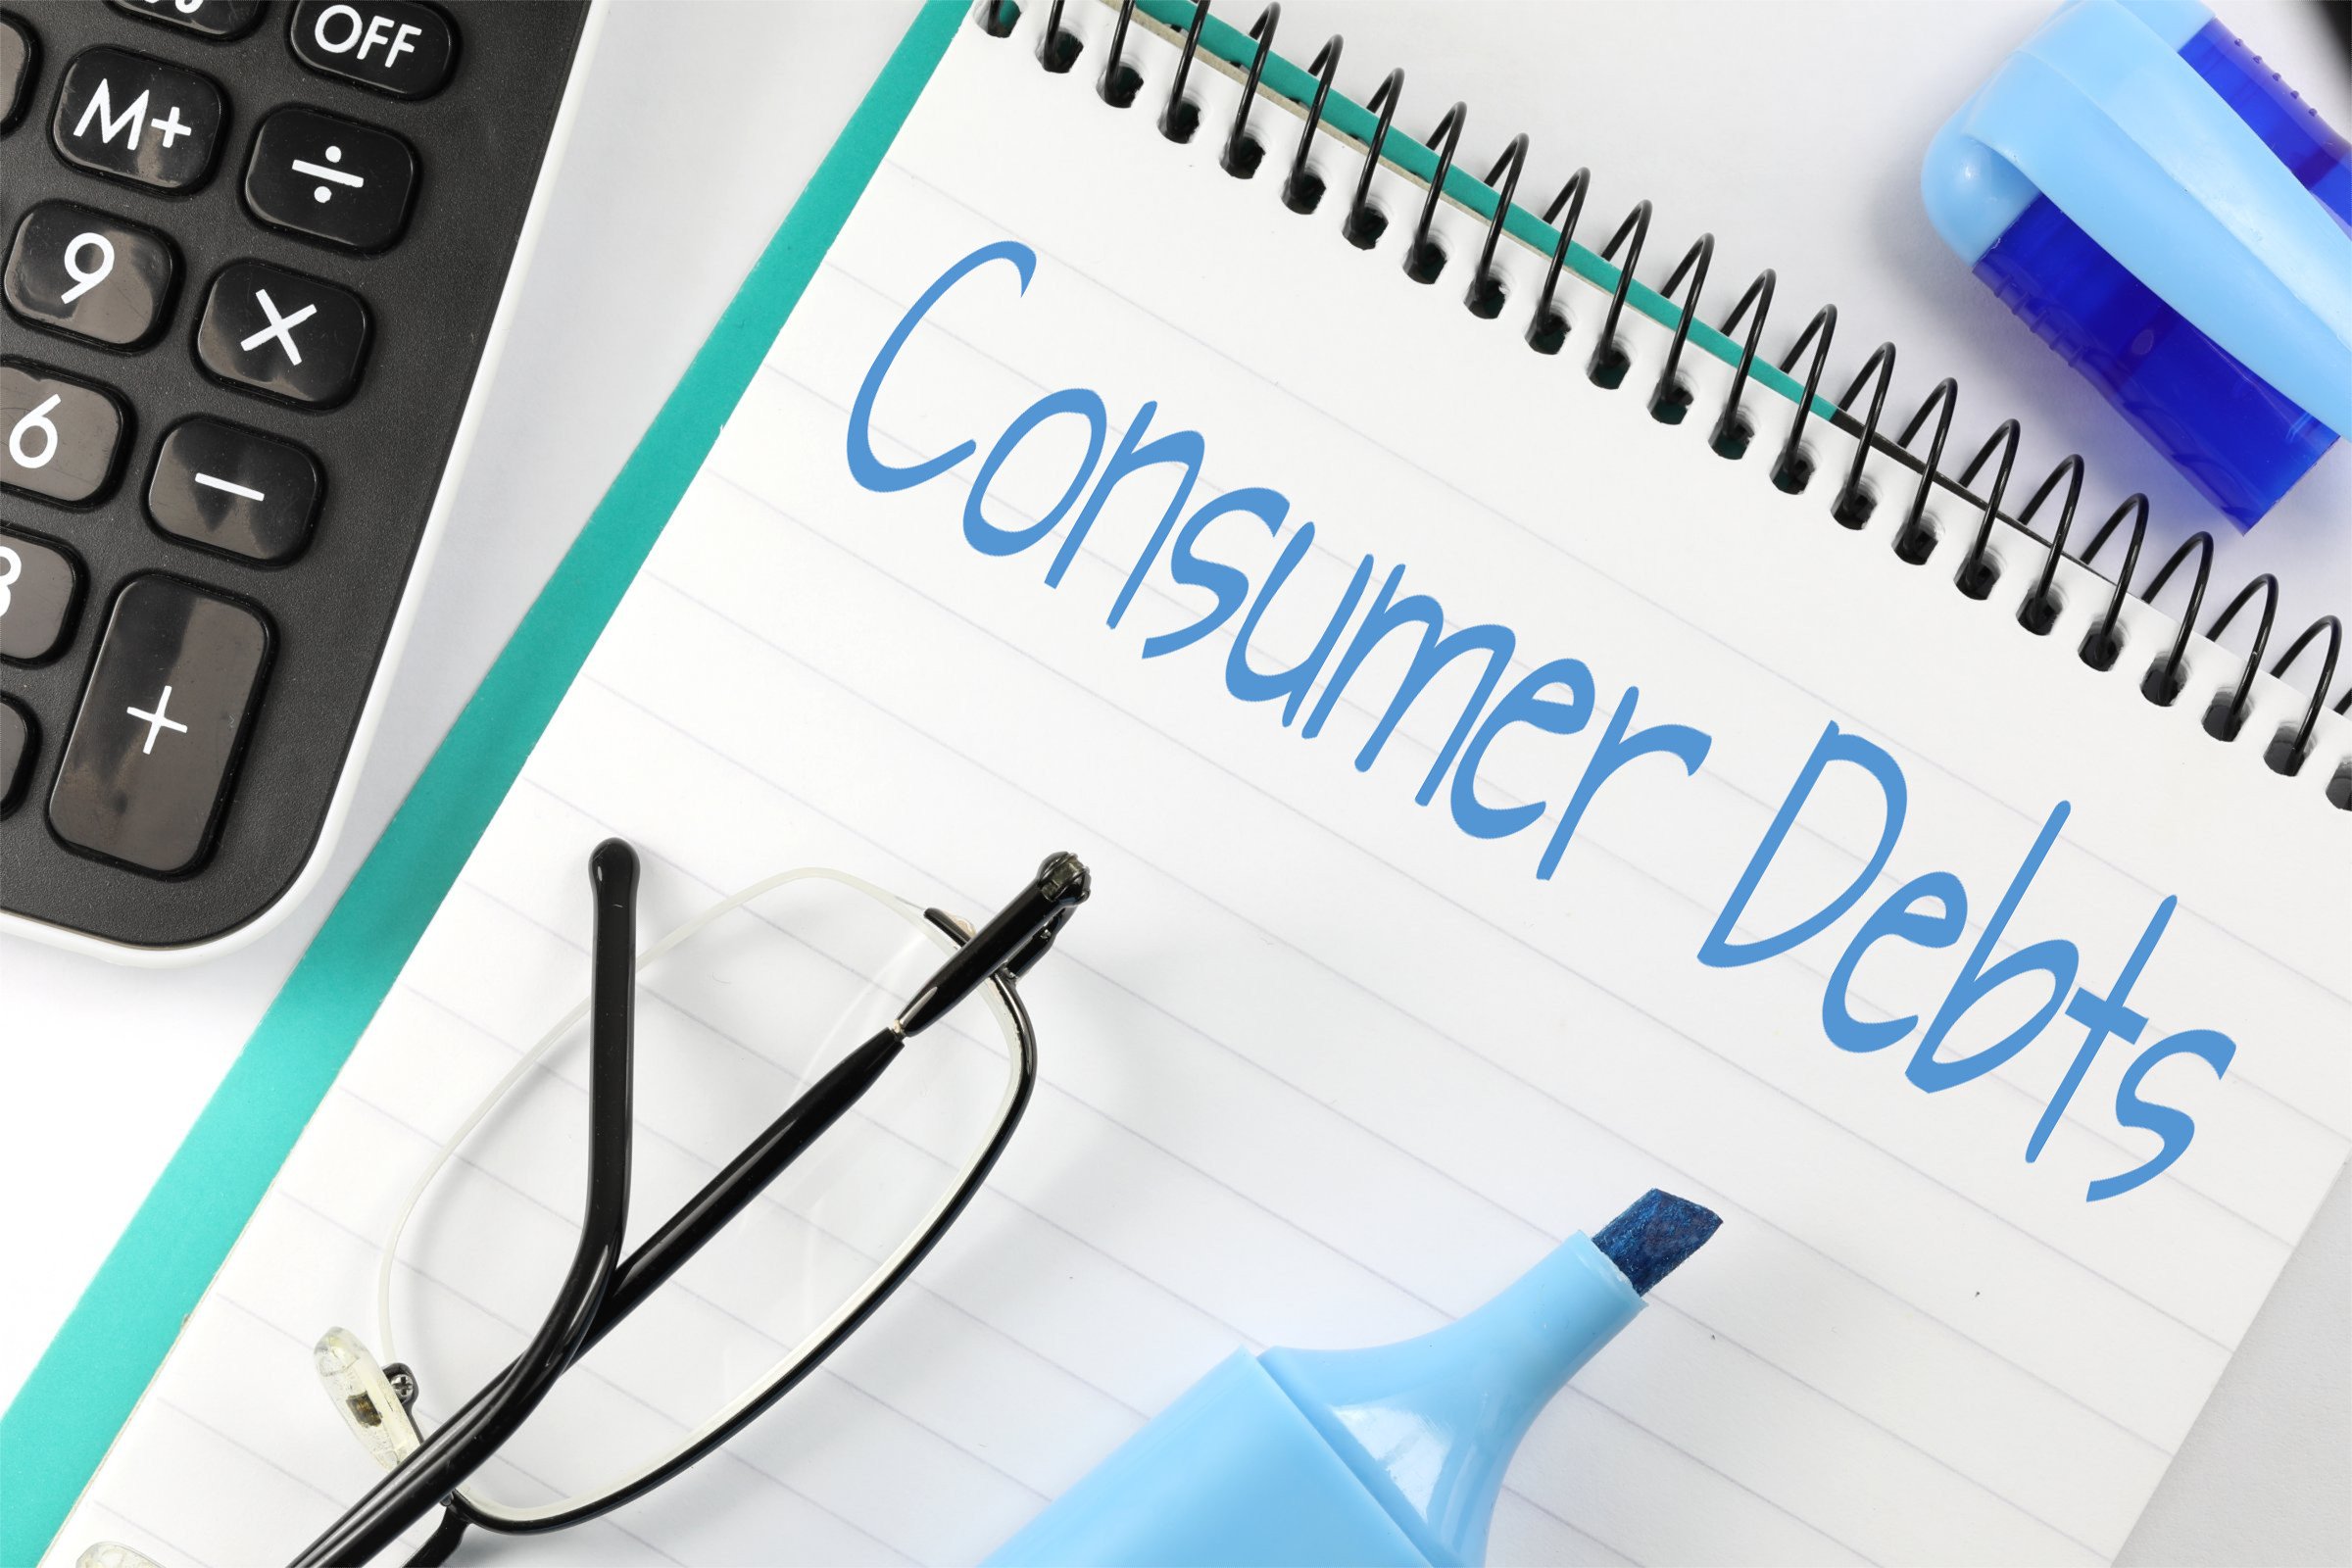 consumer debts